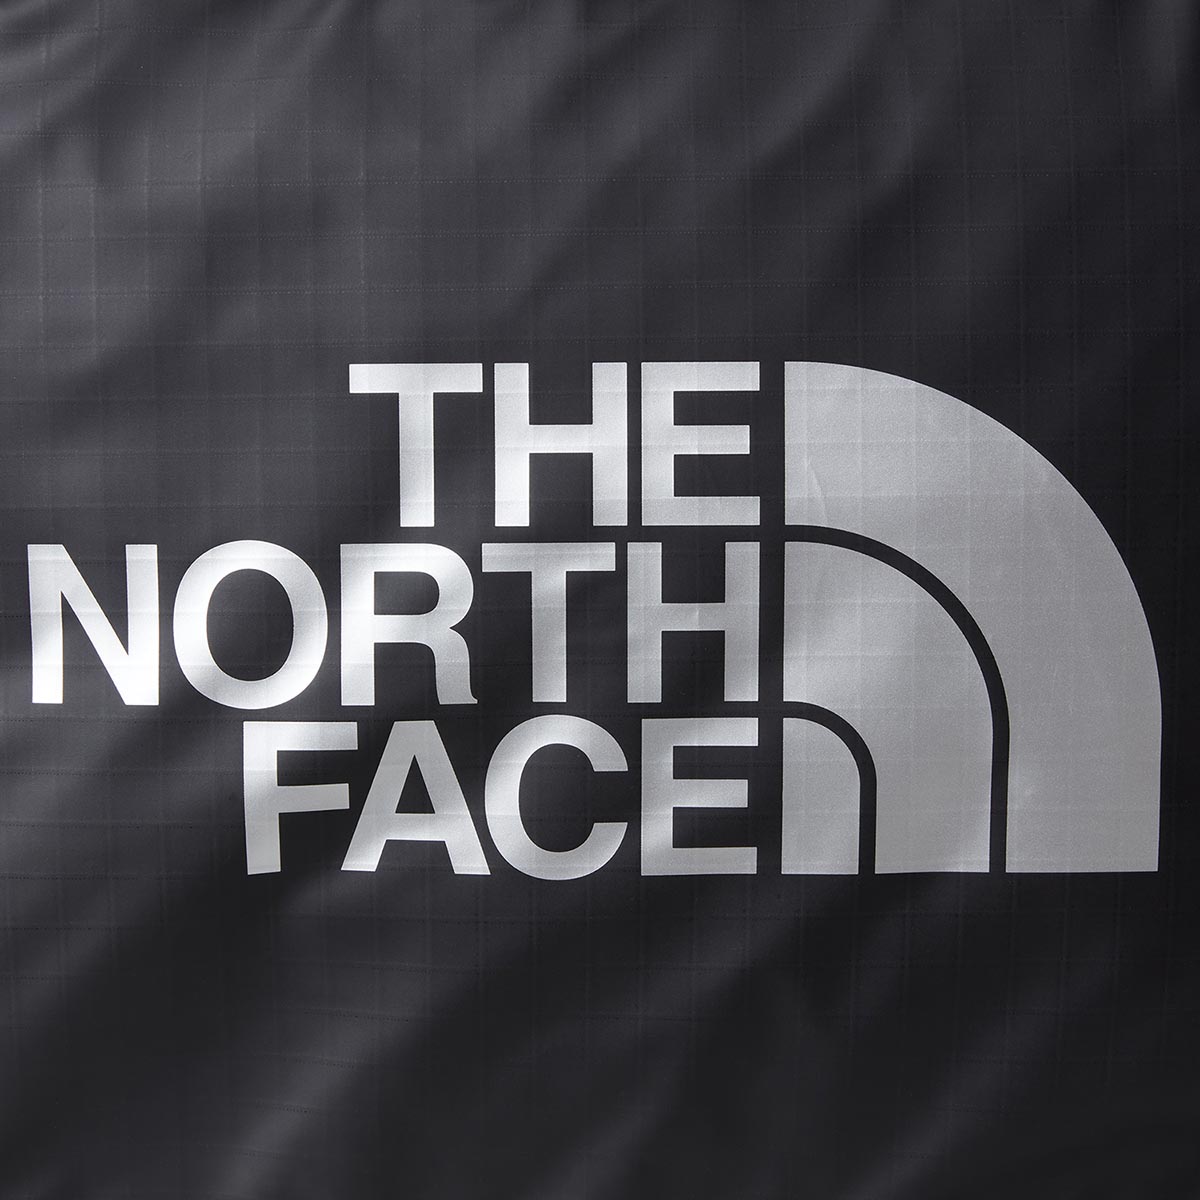 THE NORTH FACE - BASE CAMP GEAR BOX - MEDIUM